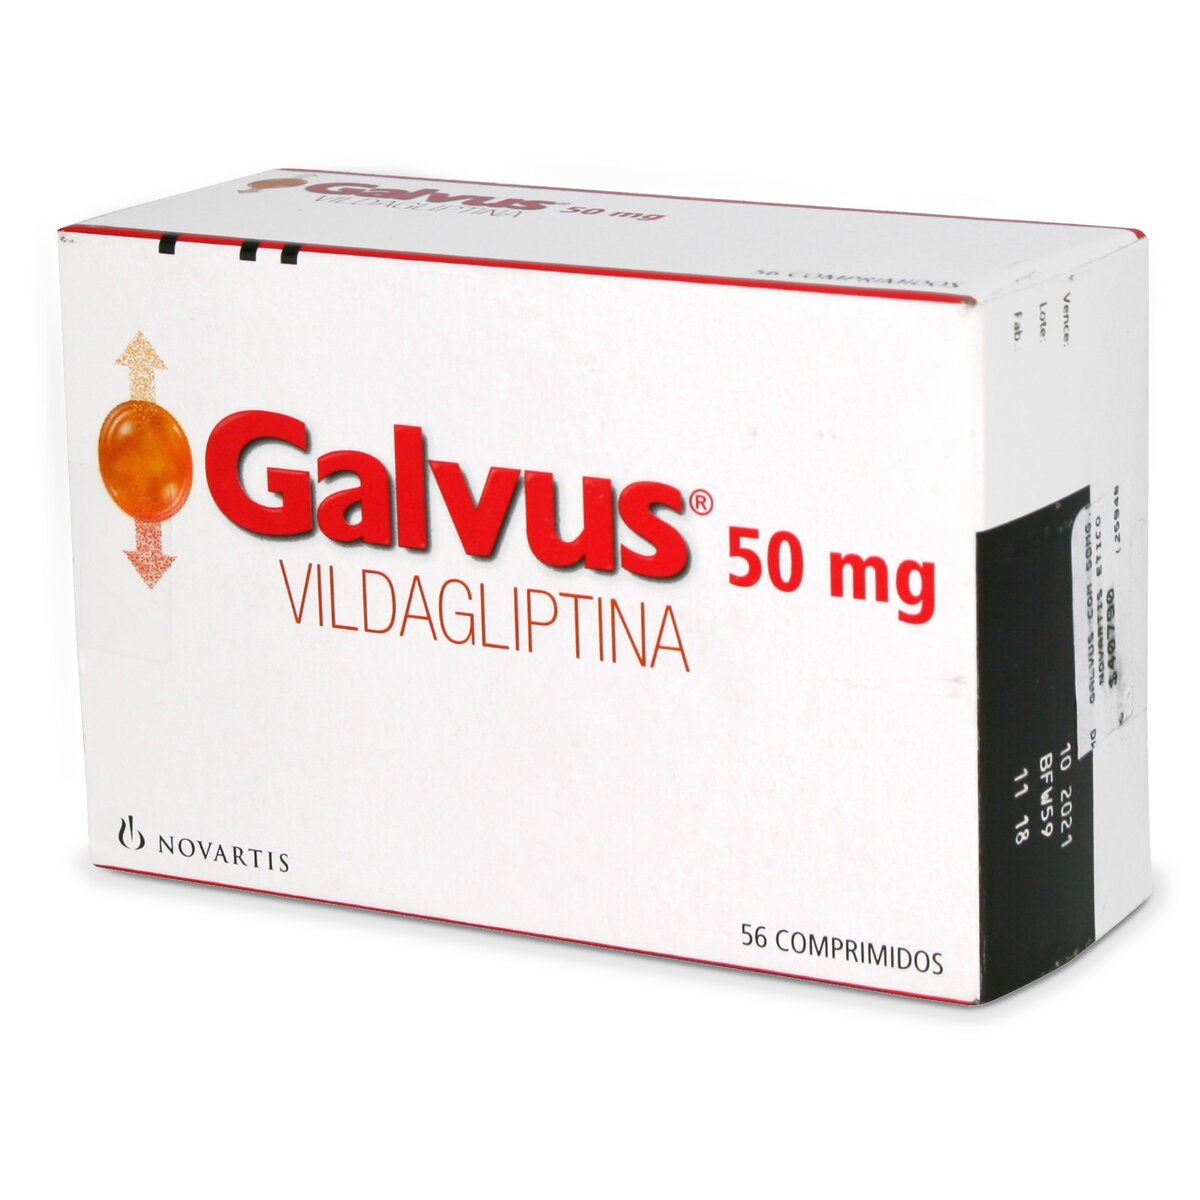 Таблетки галвус мет 1000. Галвус вилдаглиптин 50 мг. Галвус-мет 50/1000. Галвус 60 таб. Galbus med 50 + 1000.